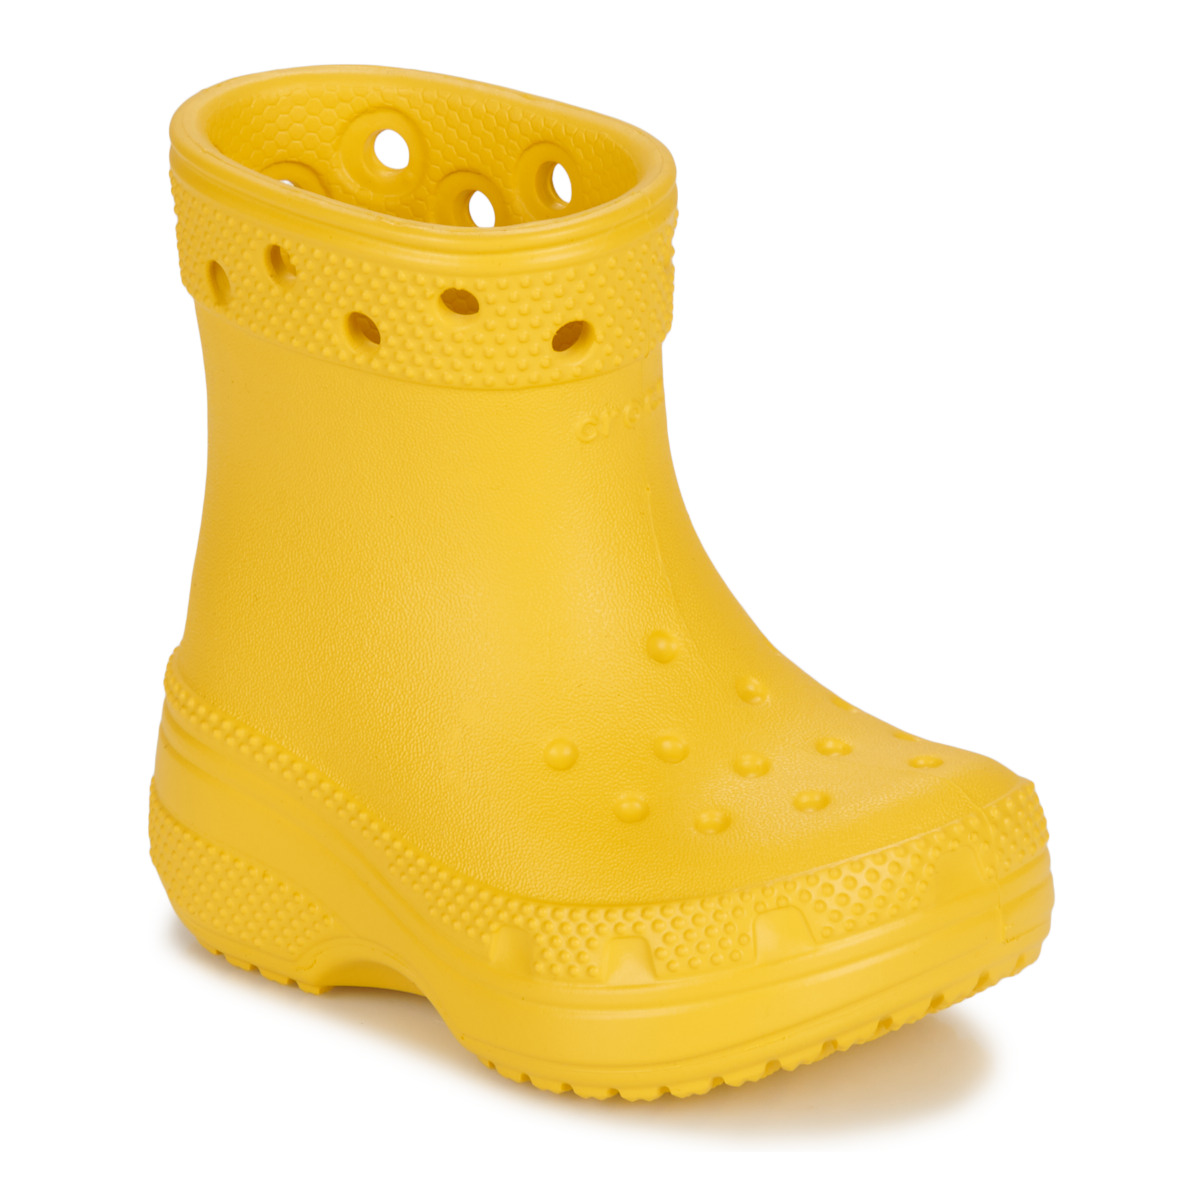 Skor Barn Gummistövlar Crocs Classic Boot T Gul